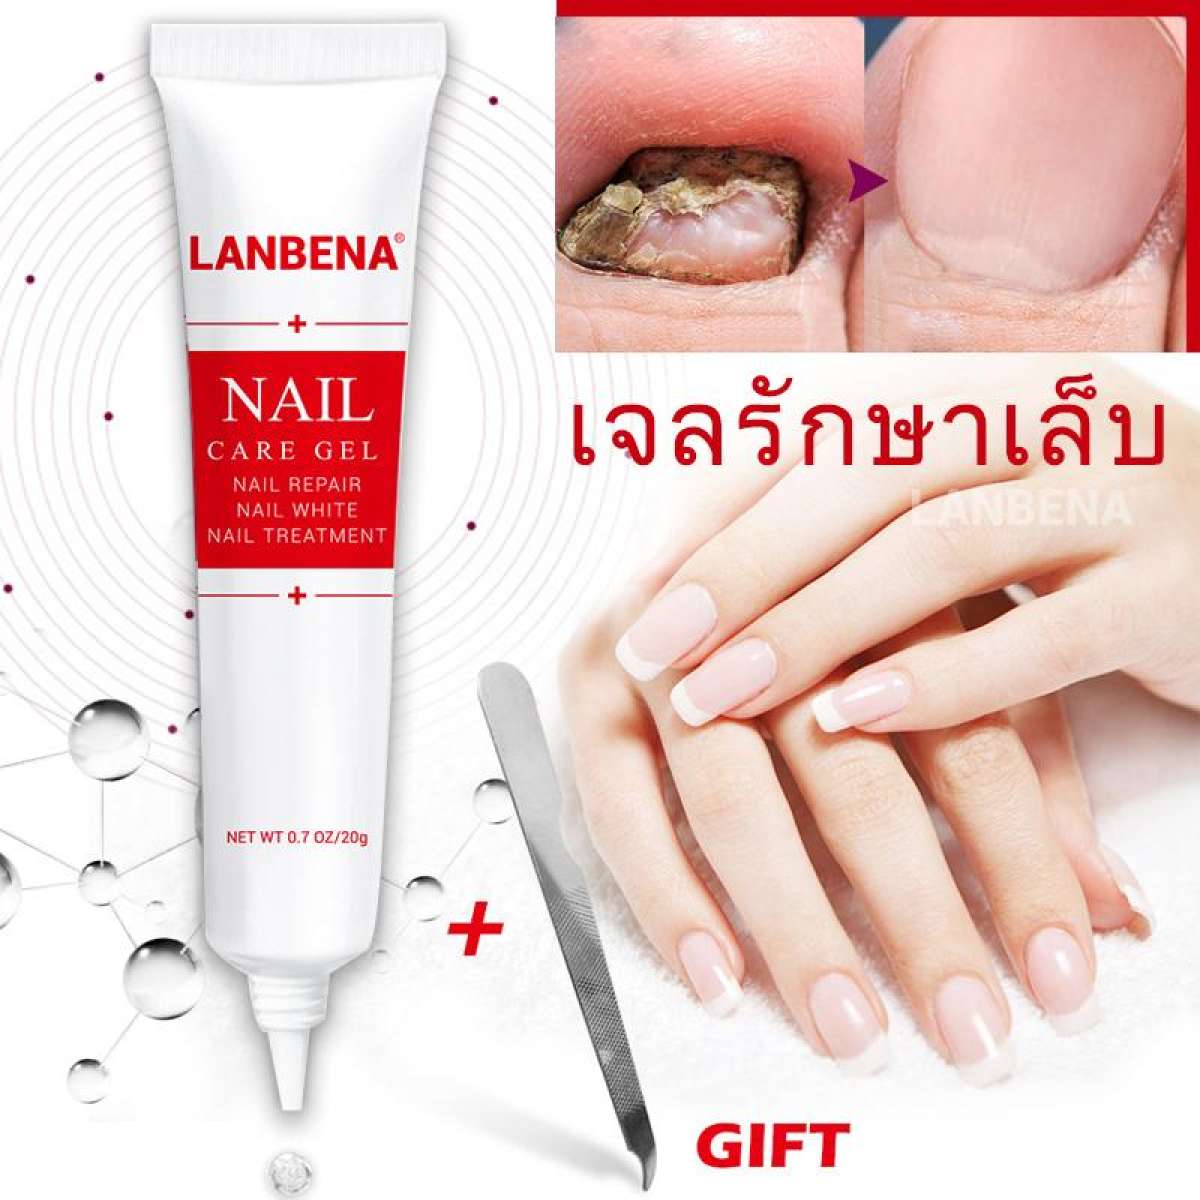 LANBENA เจลรักษาเล็บ ลบเชื้อราเล็บ บำรุงผิว รักษาอาการปวด ใช้ได้มือและเท้าNail Care Gel Fungal Nail Treatment Remove Onychomycosis Nail Care Hand And Foot Care(Hot Deal)